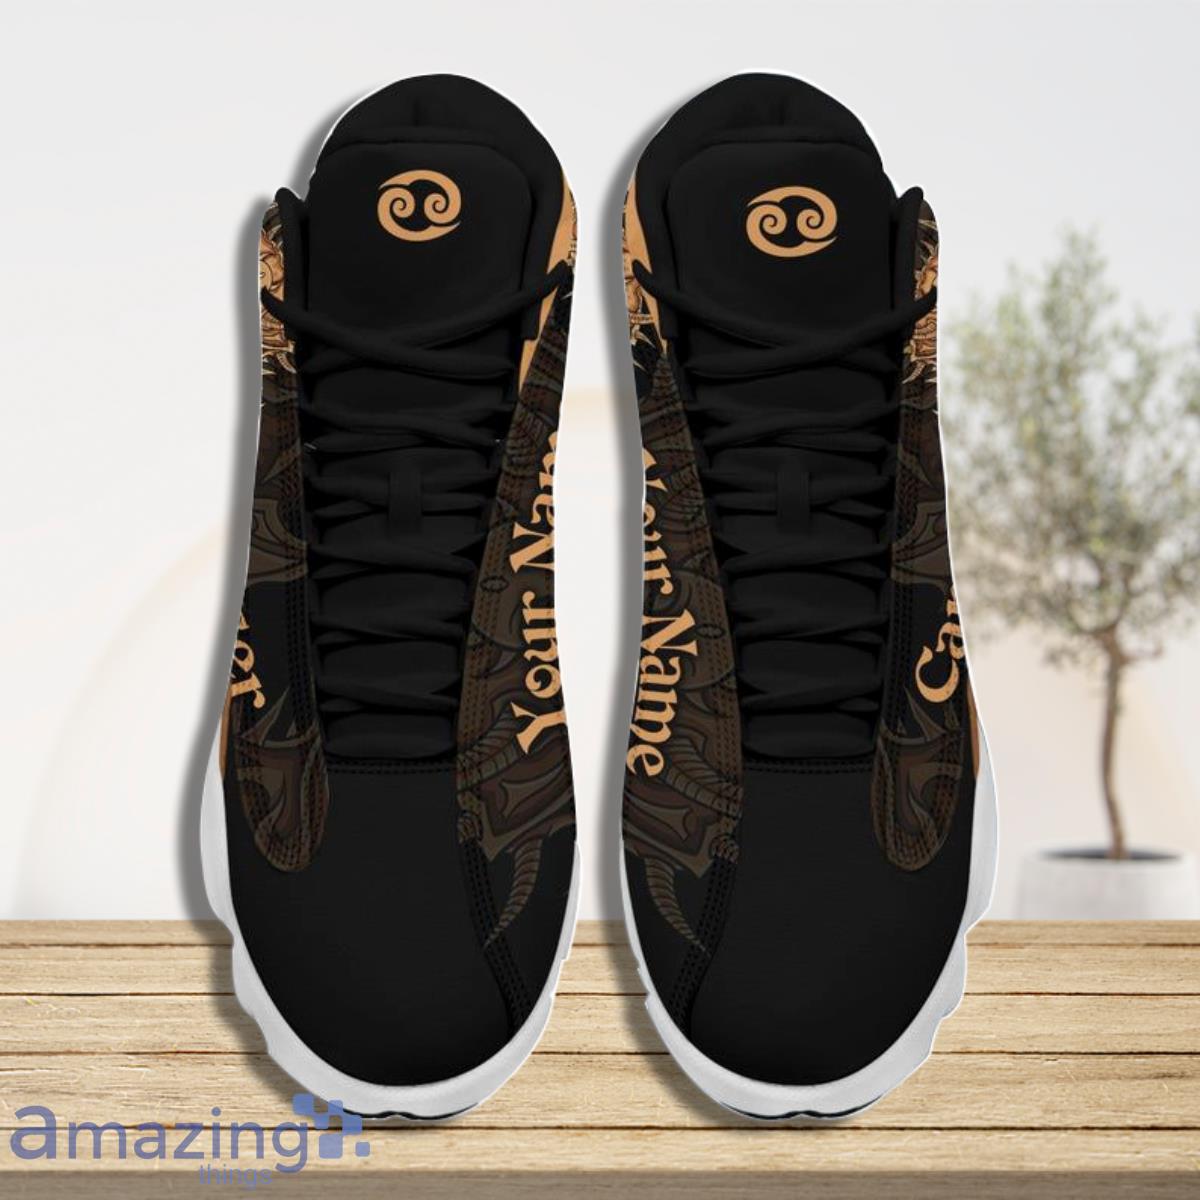 Cancer Brown Gold Air Jordan 13 Custom Name Sneakers Best Gift For